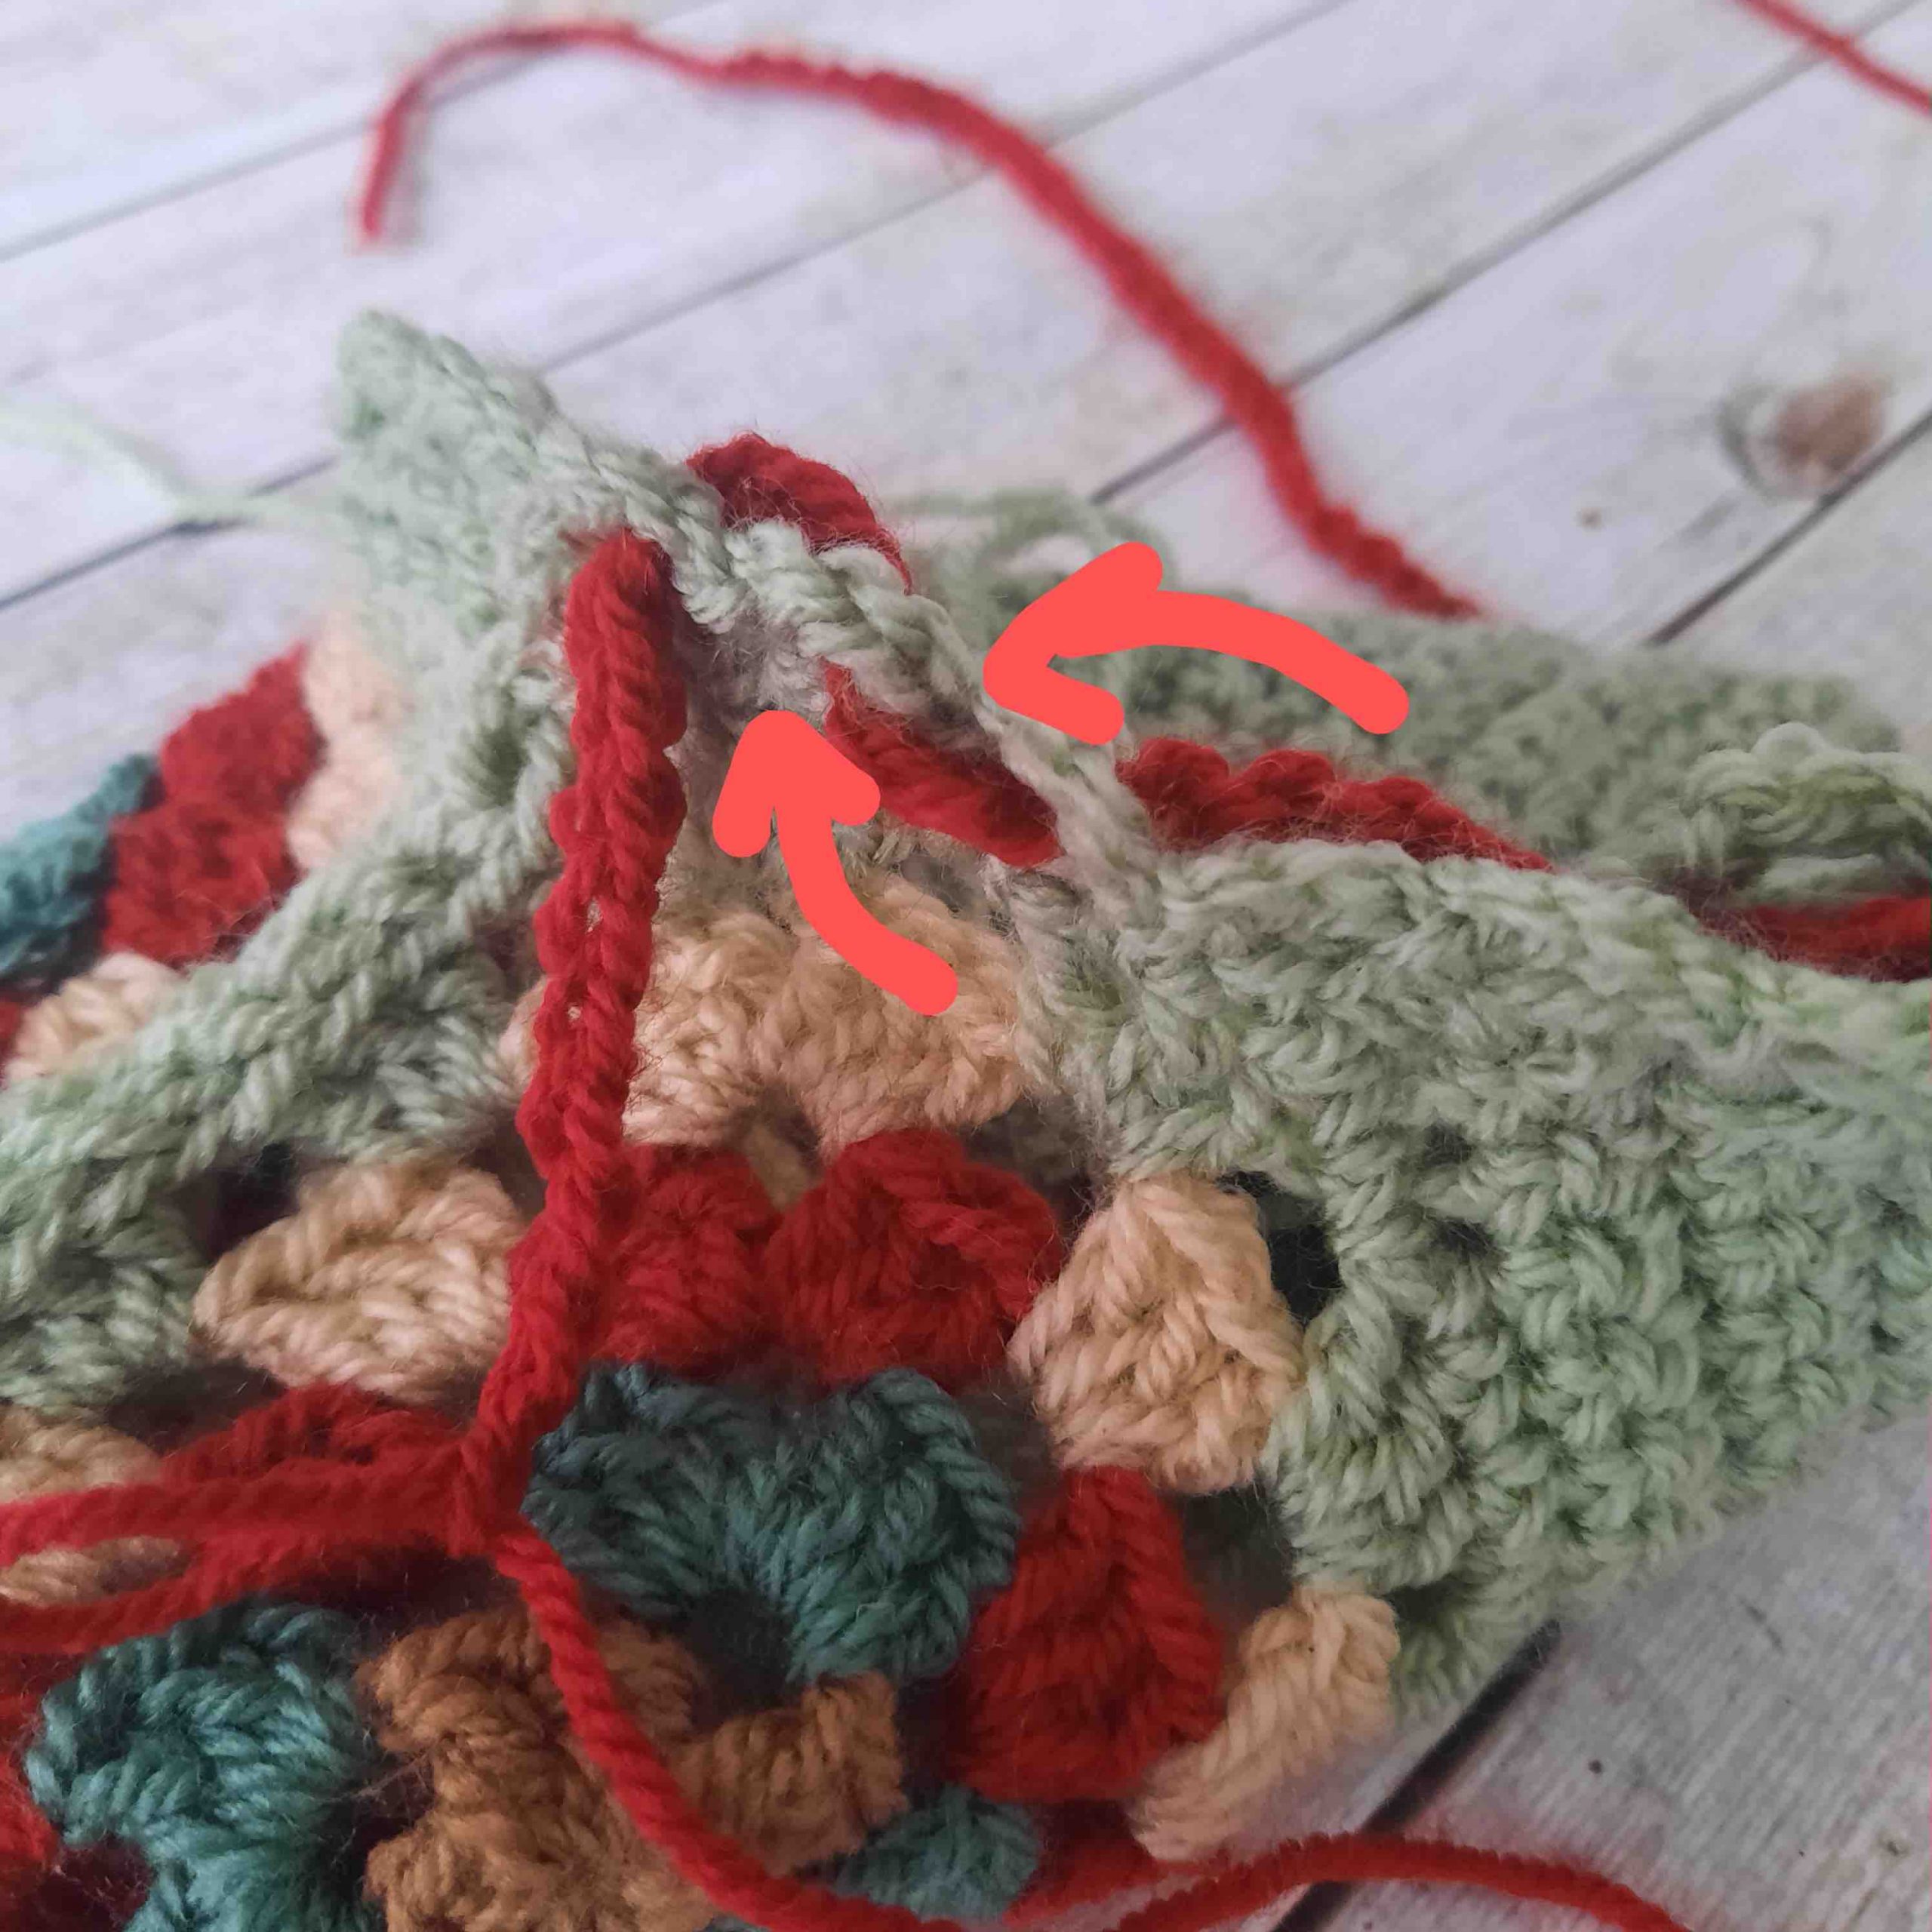 Grandma's slipper crochet pattern